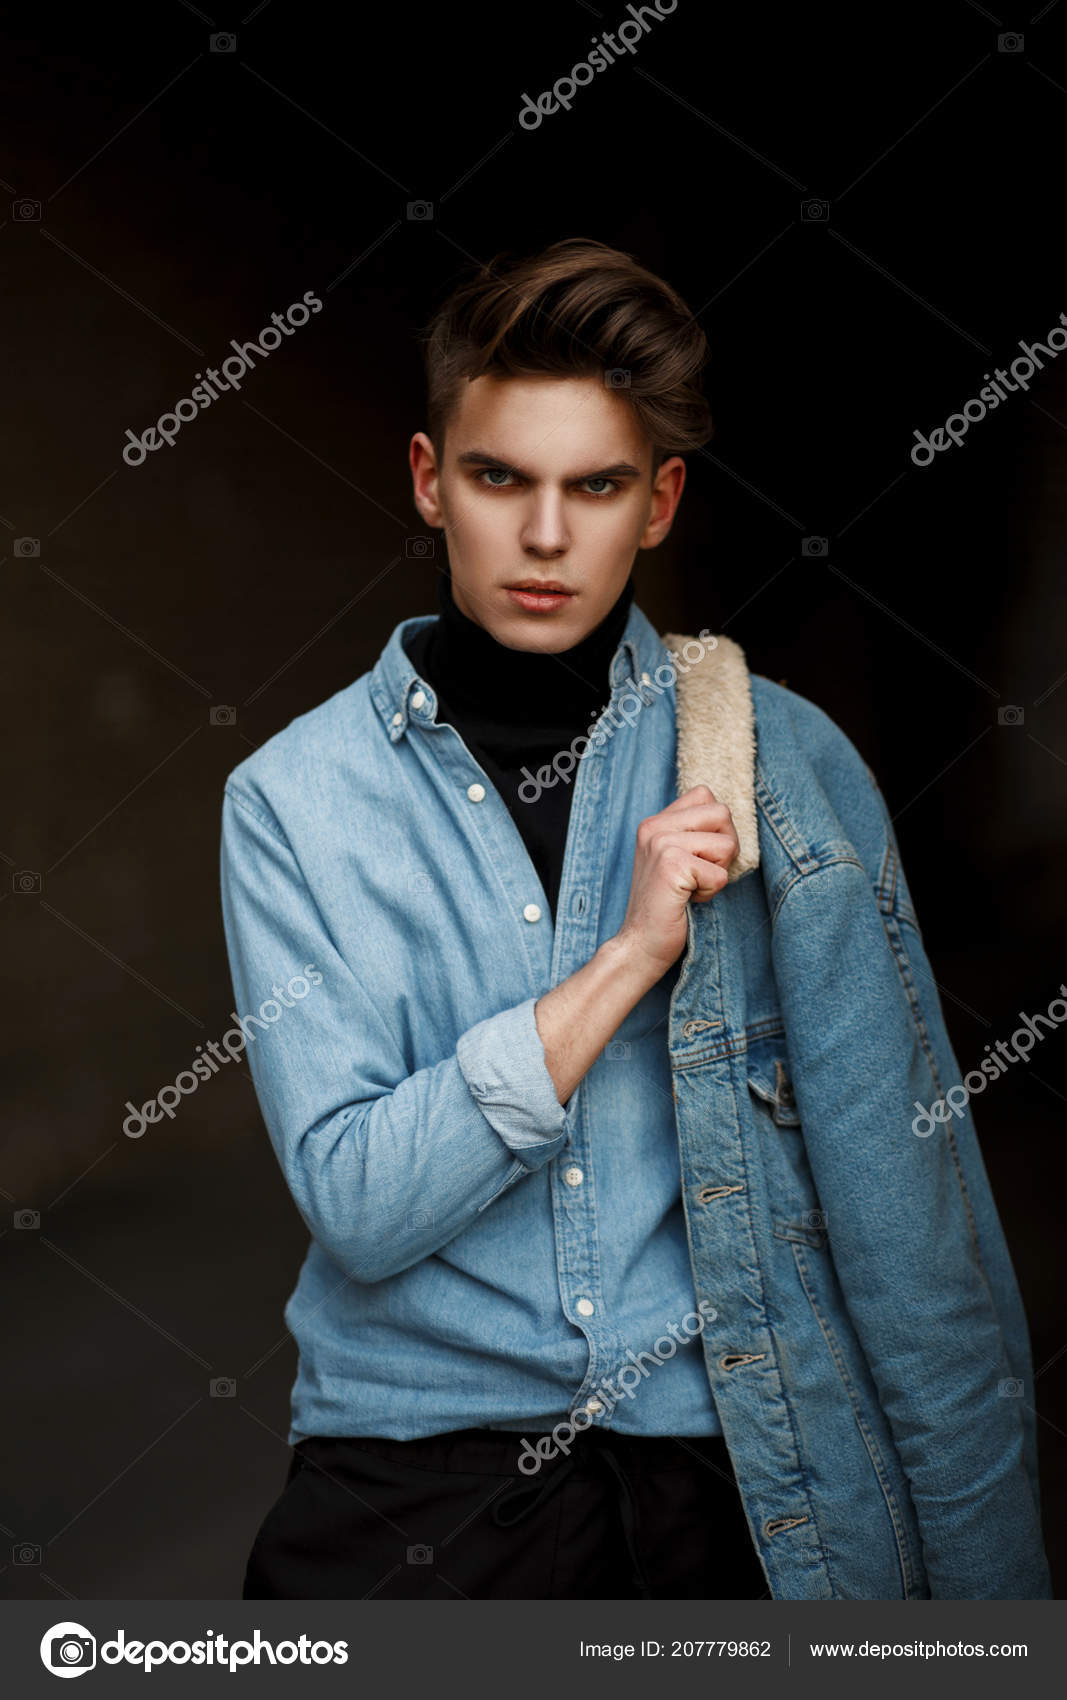 Brunette Boy Jeans Jacket Poses Outside Stock Photo 676842685 | Shutterstock